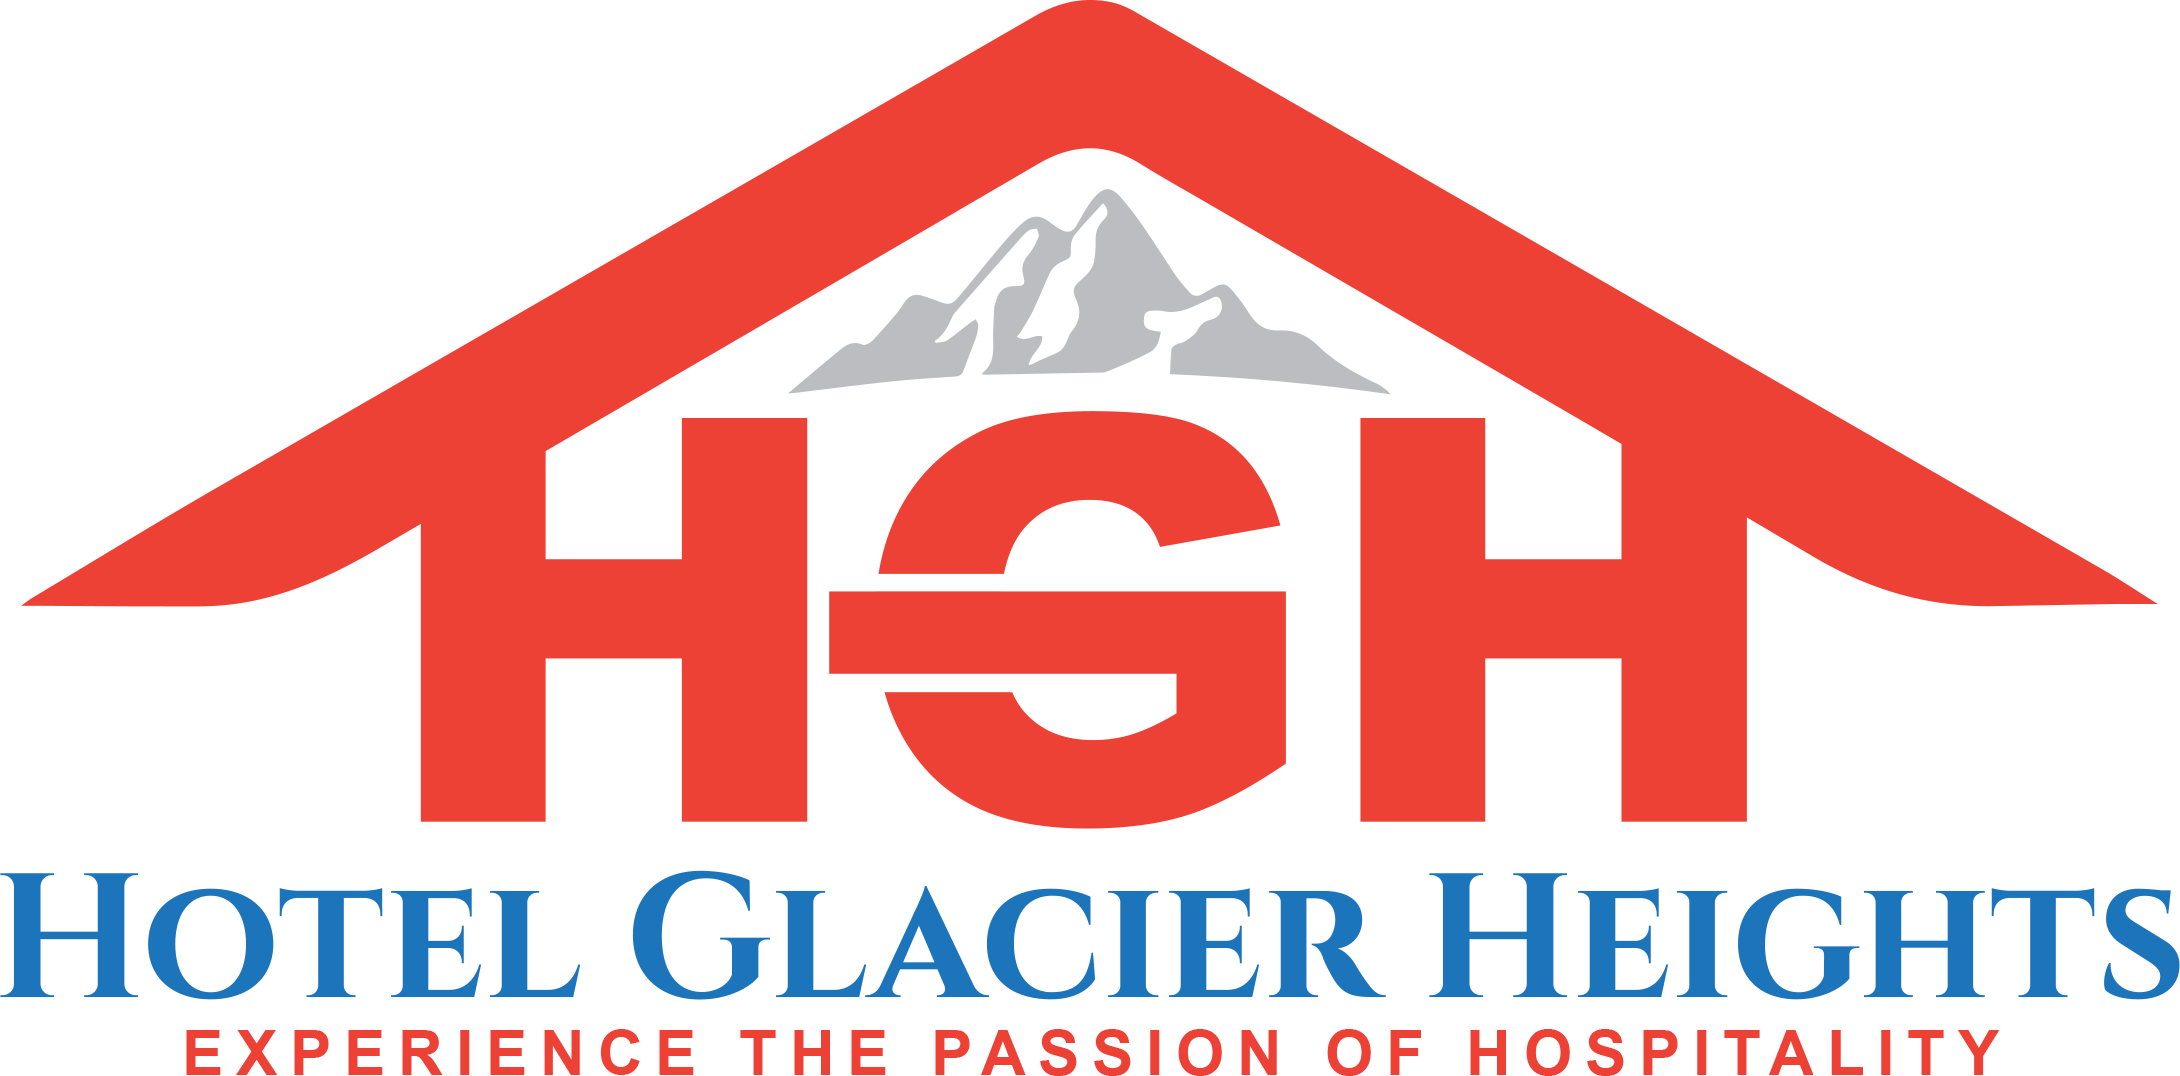 Hotel Glacier Heights|Hotel|Accomodation